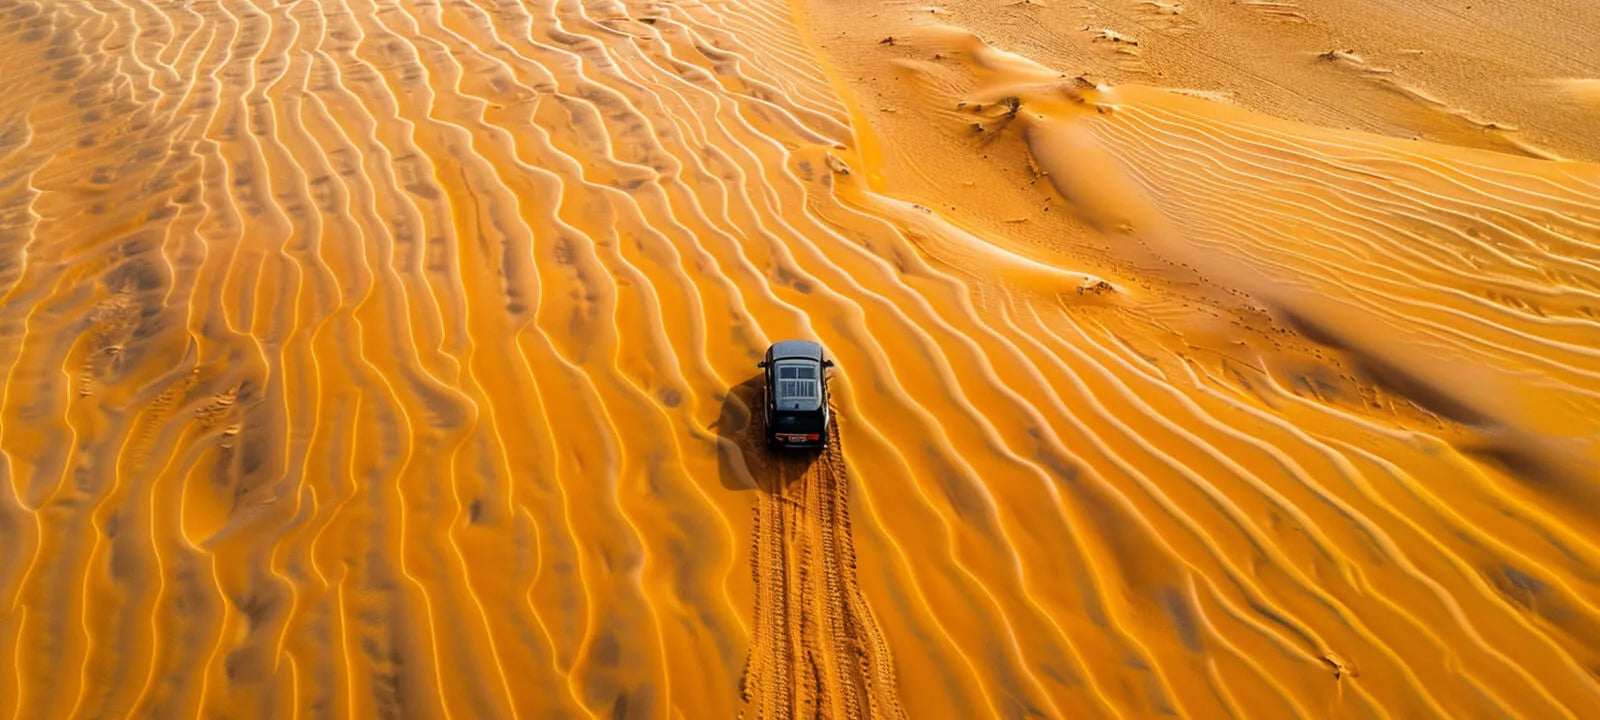 Venturing through golden dunes, a symbol of the travel spirit.